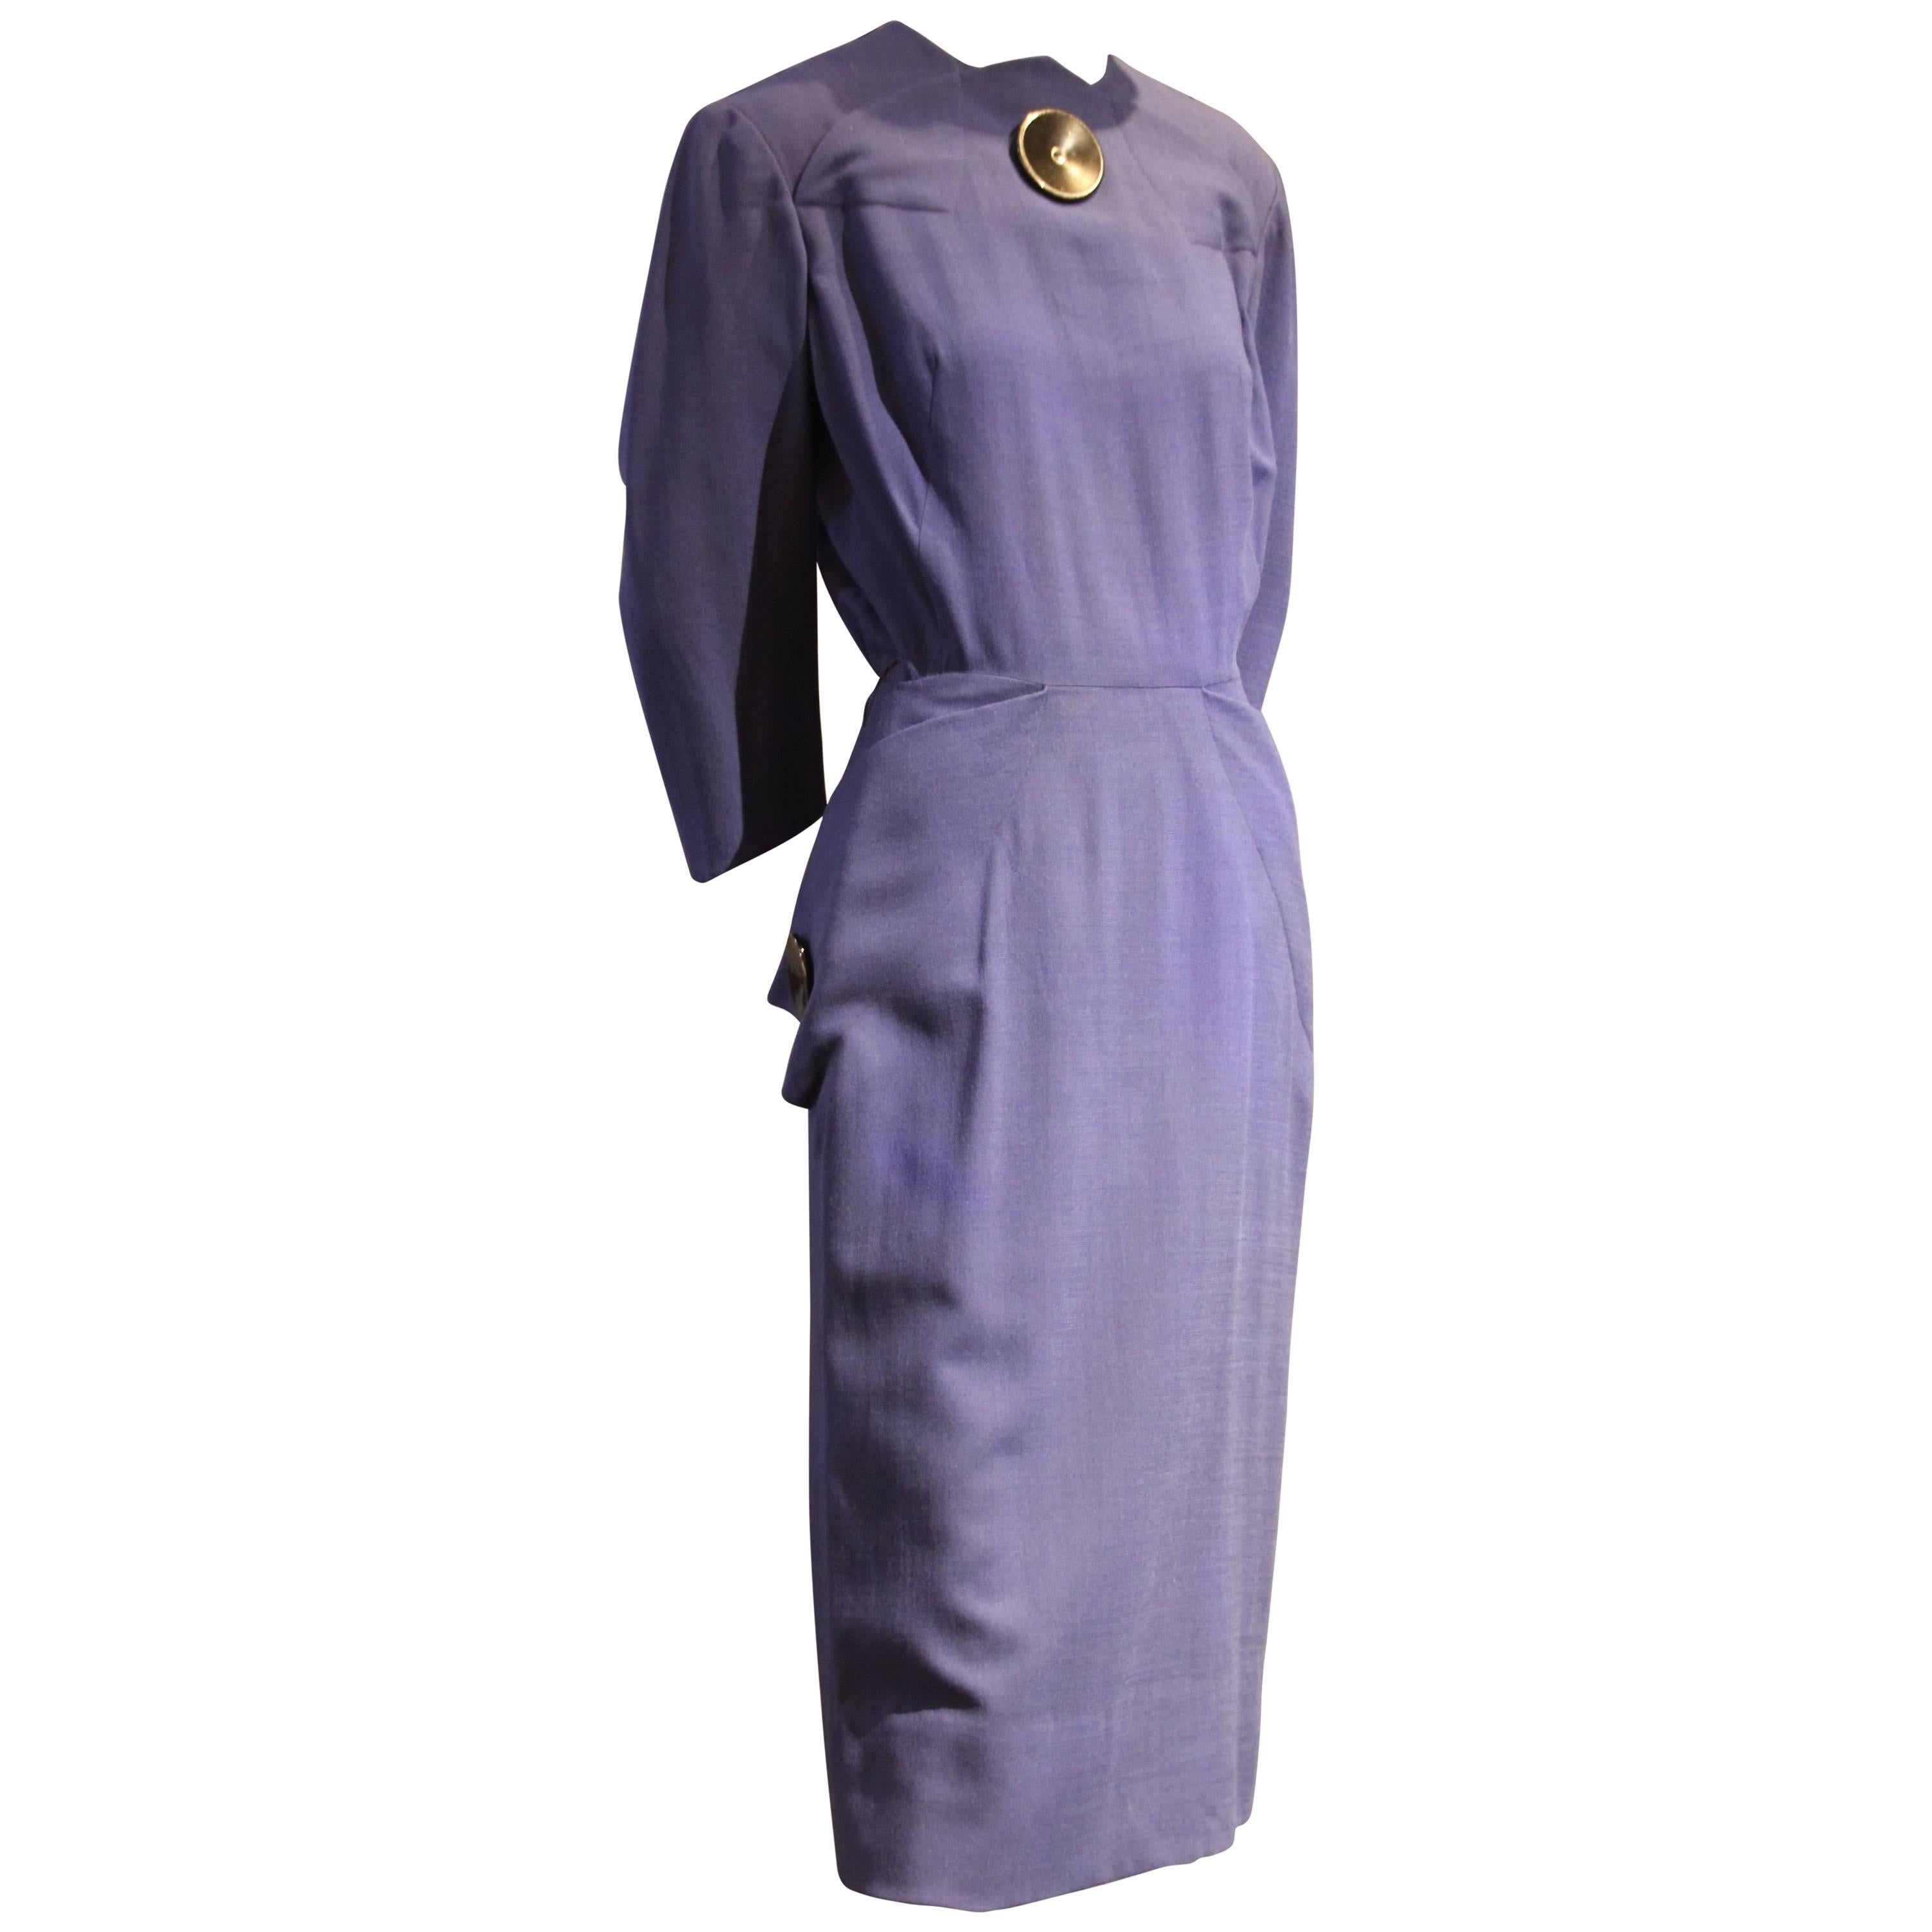 Late 1940s Eisenberg Indigo Blue Tailored Dress w Large Button Detailing